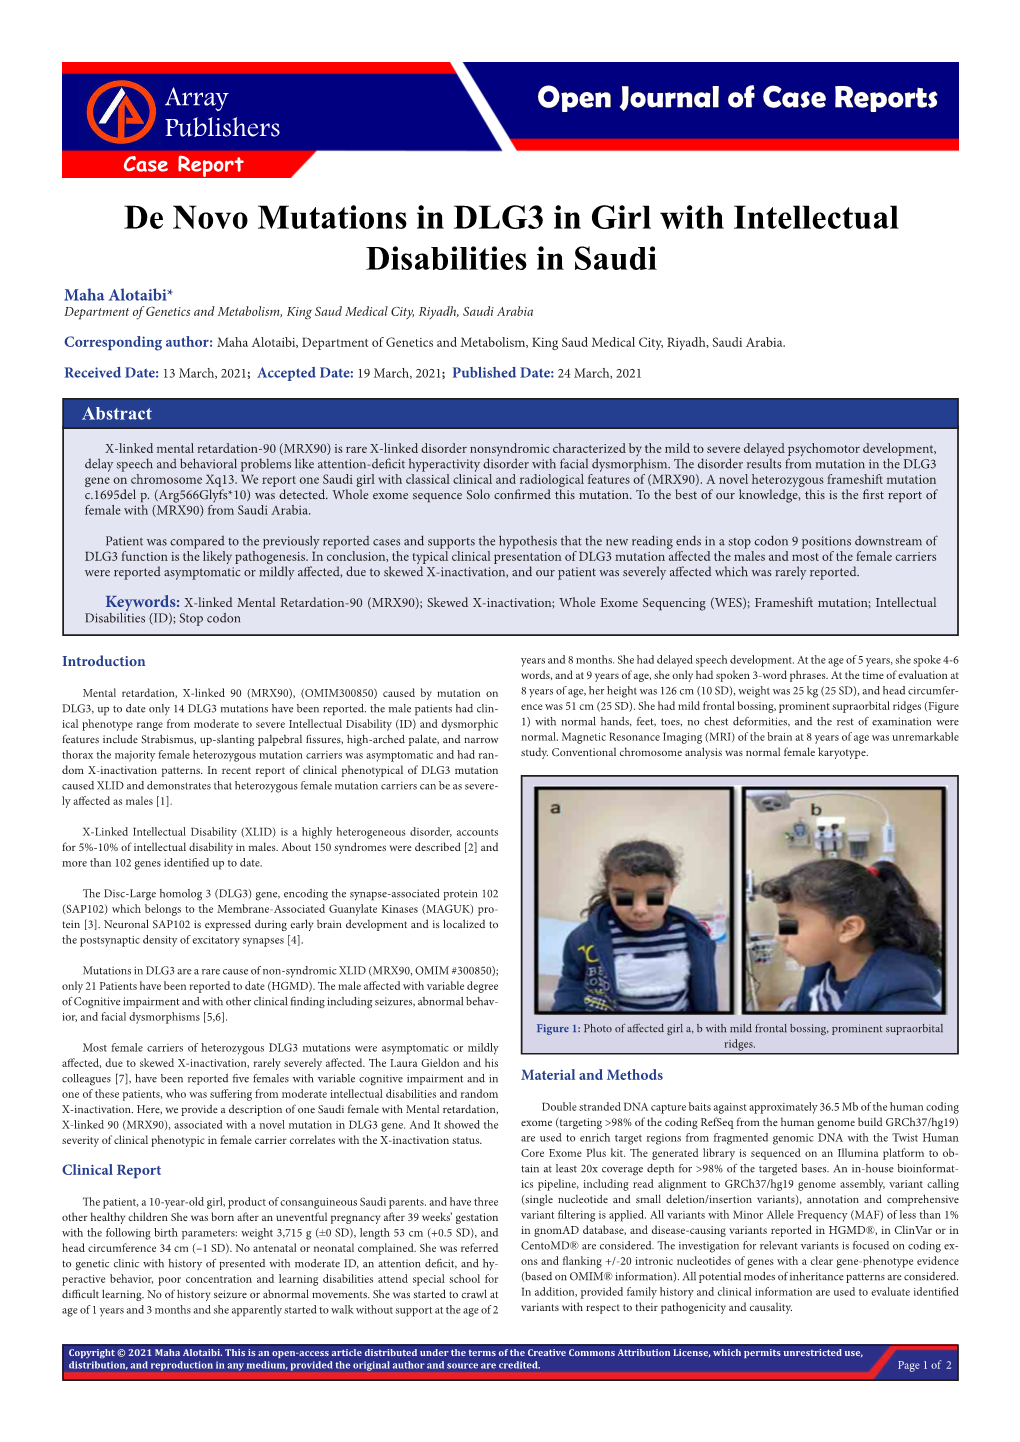 De Novo Mutations in DLG3 in Girl with Intellectual Disabilities in Saudi